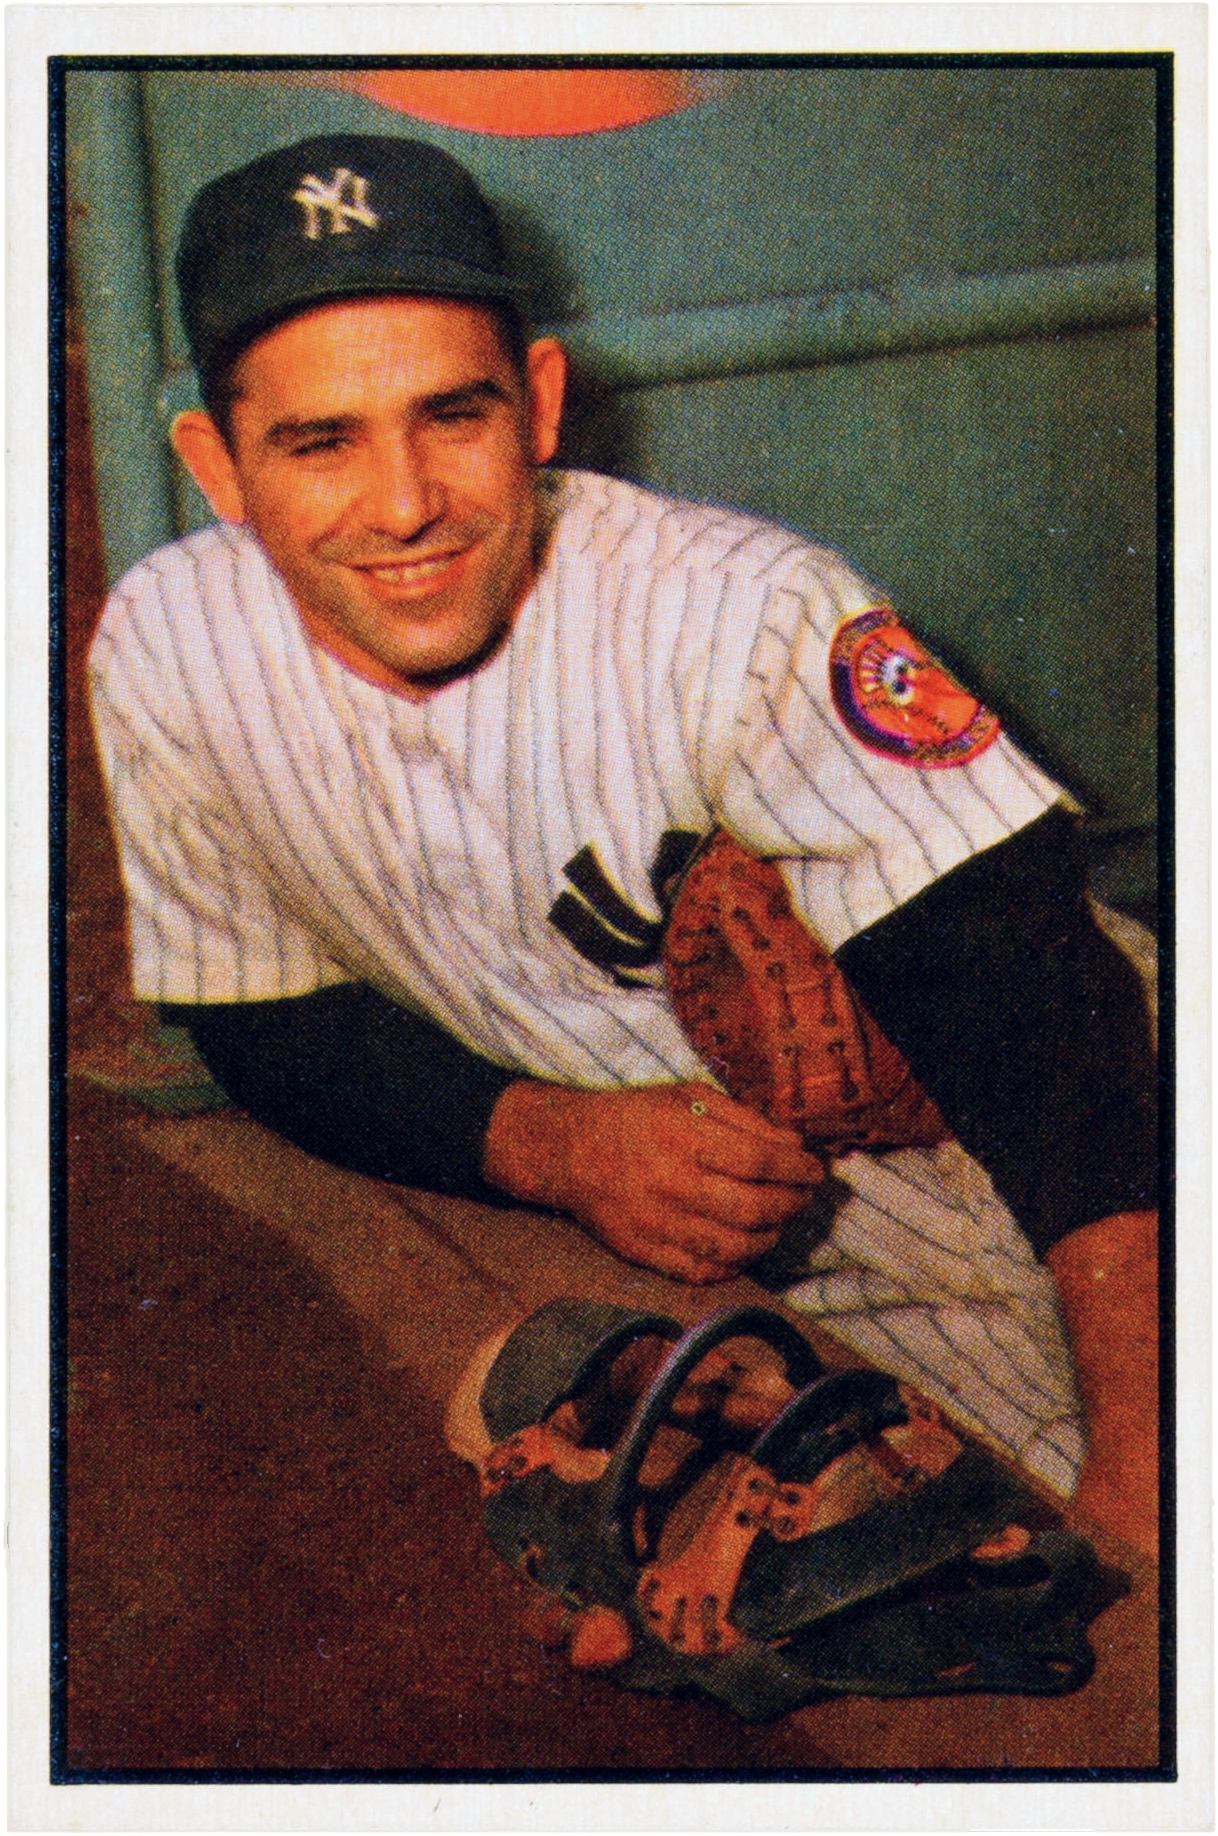 Remembering an American baseball sage of all sorts: Yogi Berra, R.I.P.